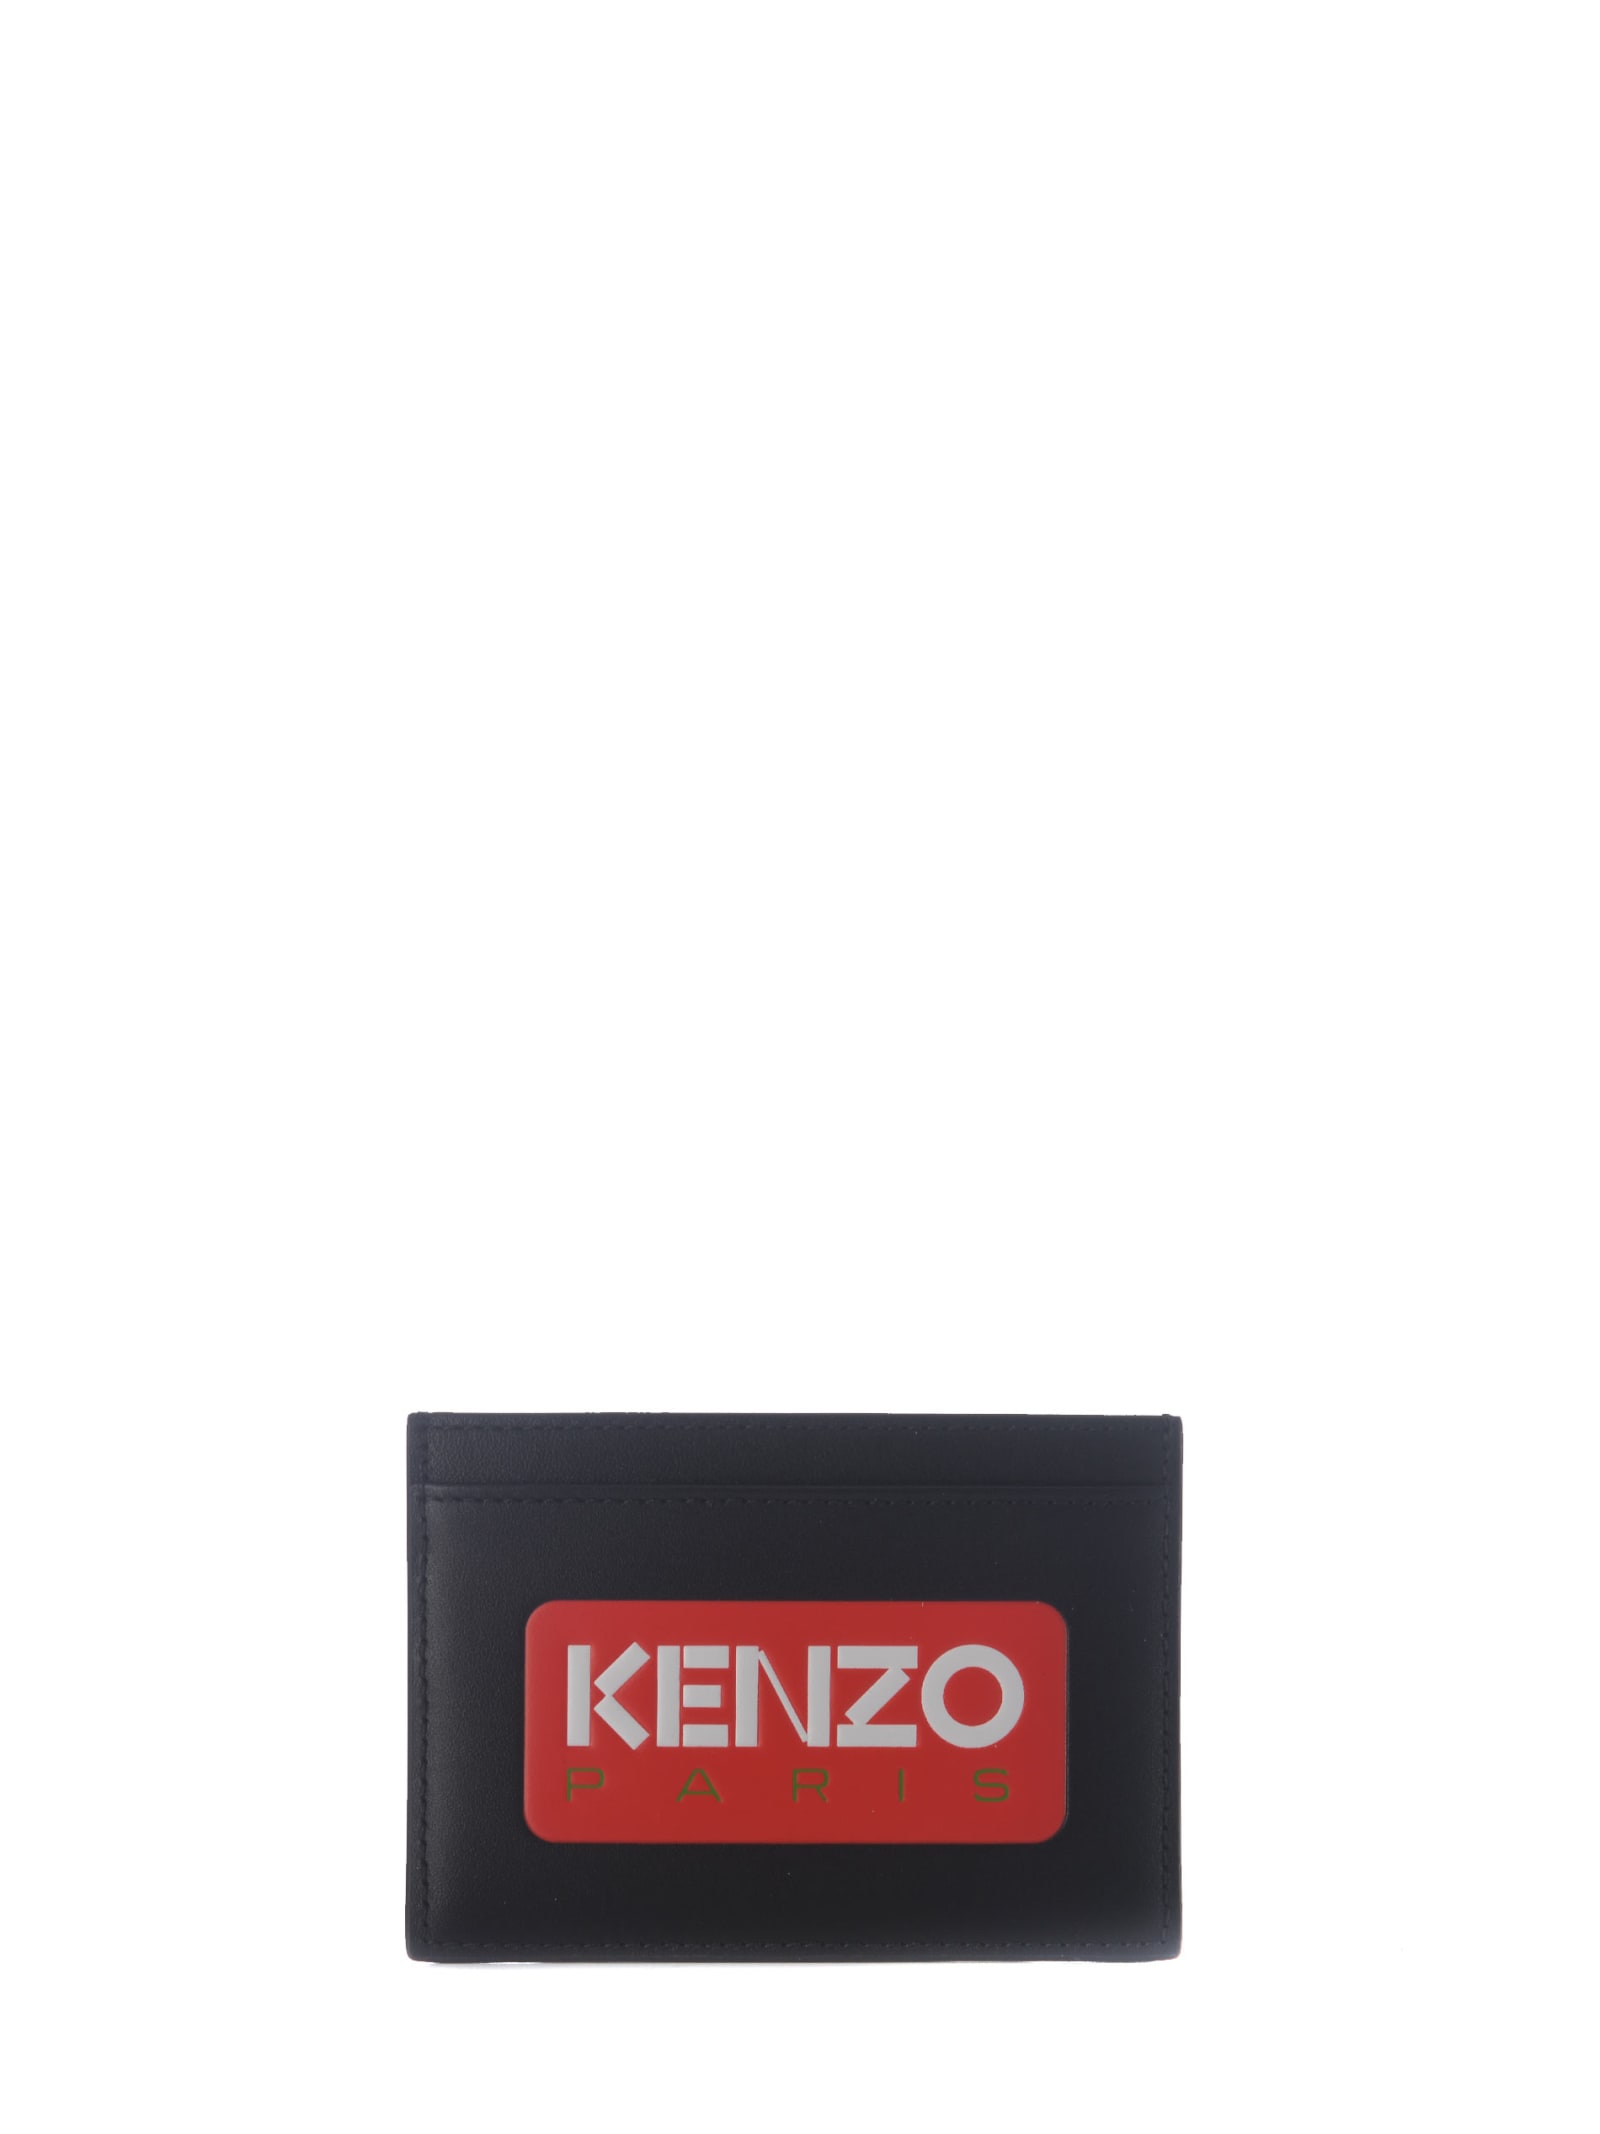 Kenzo Card Holder   Paris In Leather In Black